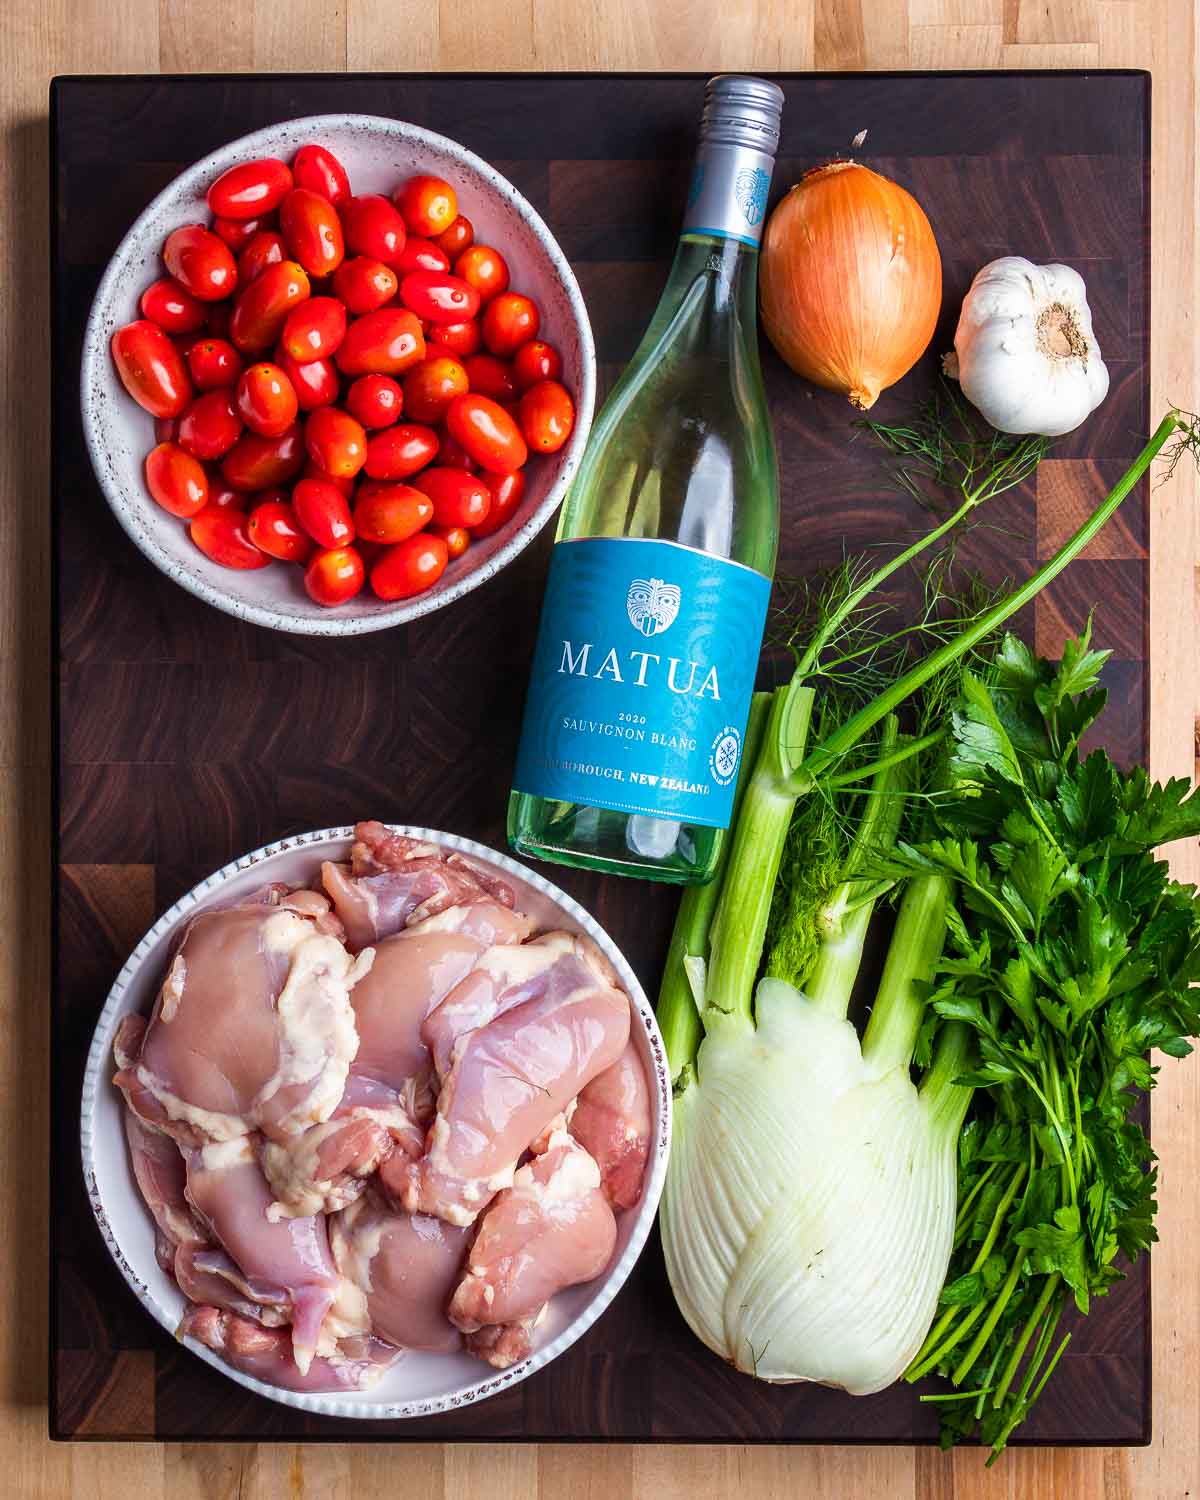 Ingredients shown: cherry tomatoes, white wine, onion, garlic, chicken thighs, and fennel.